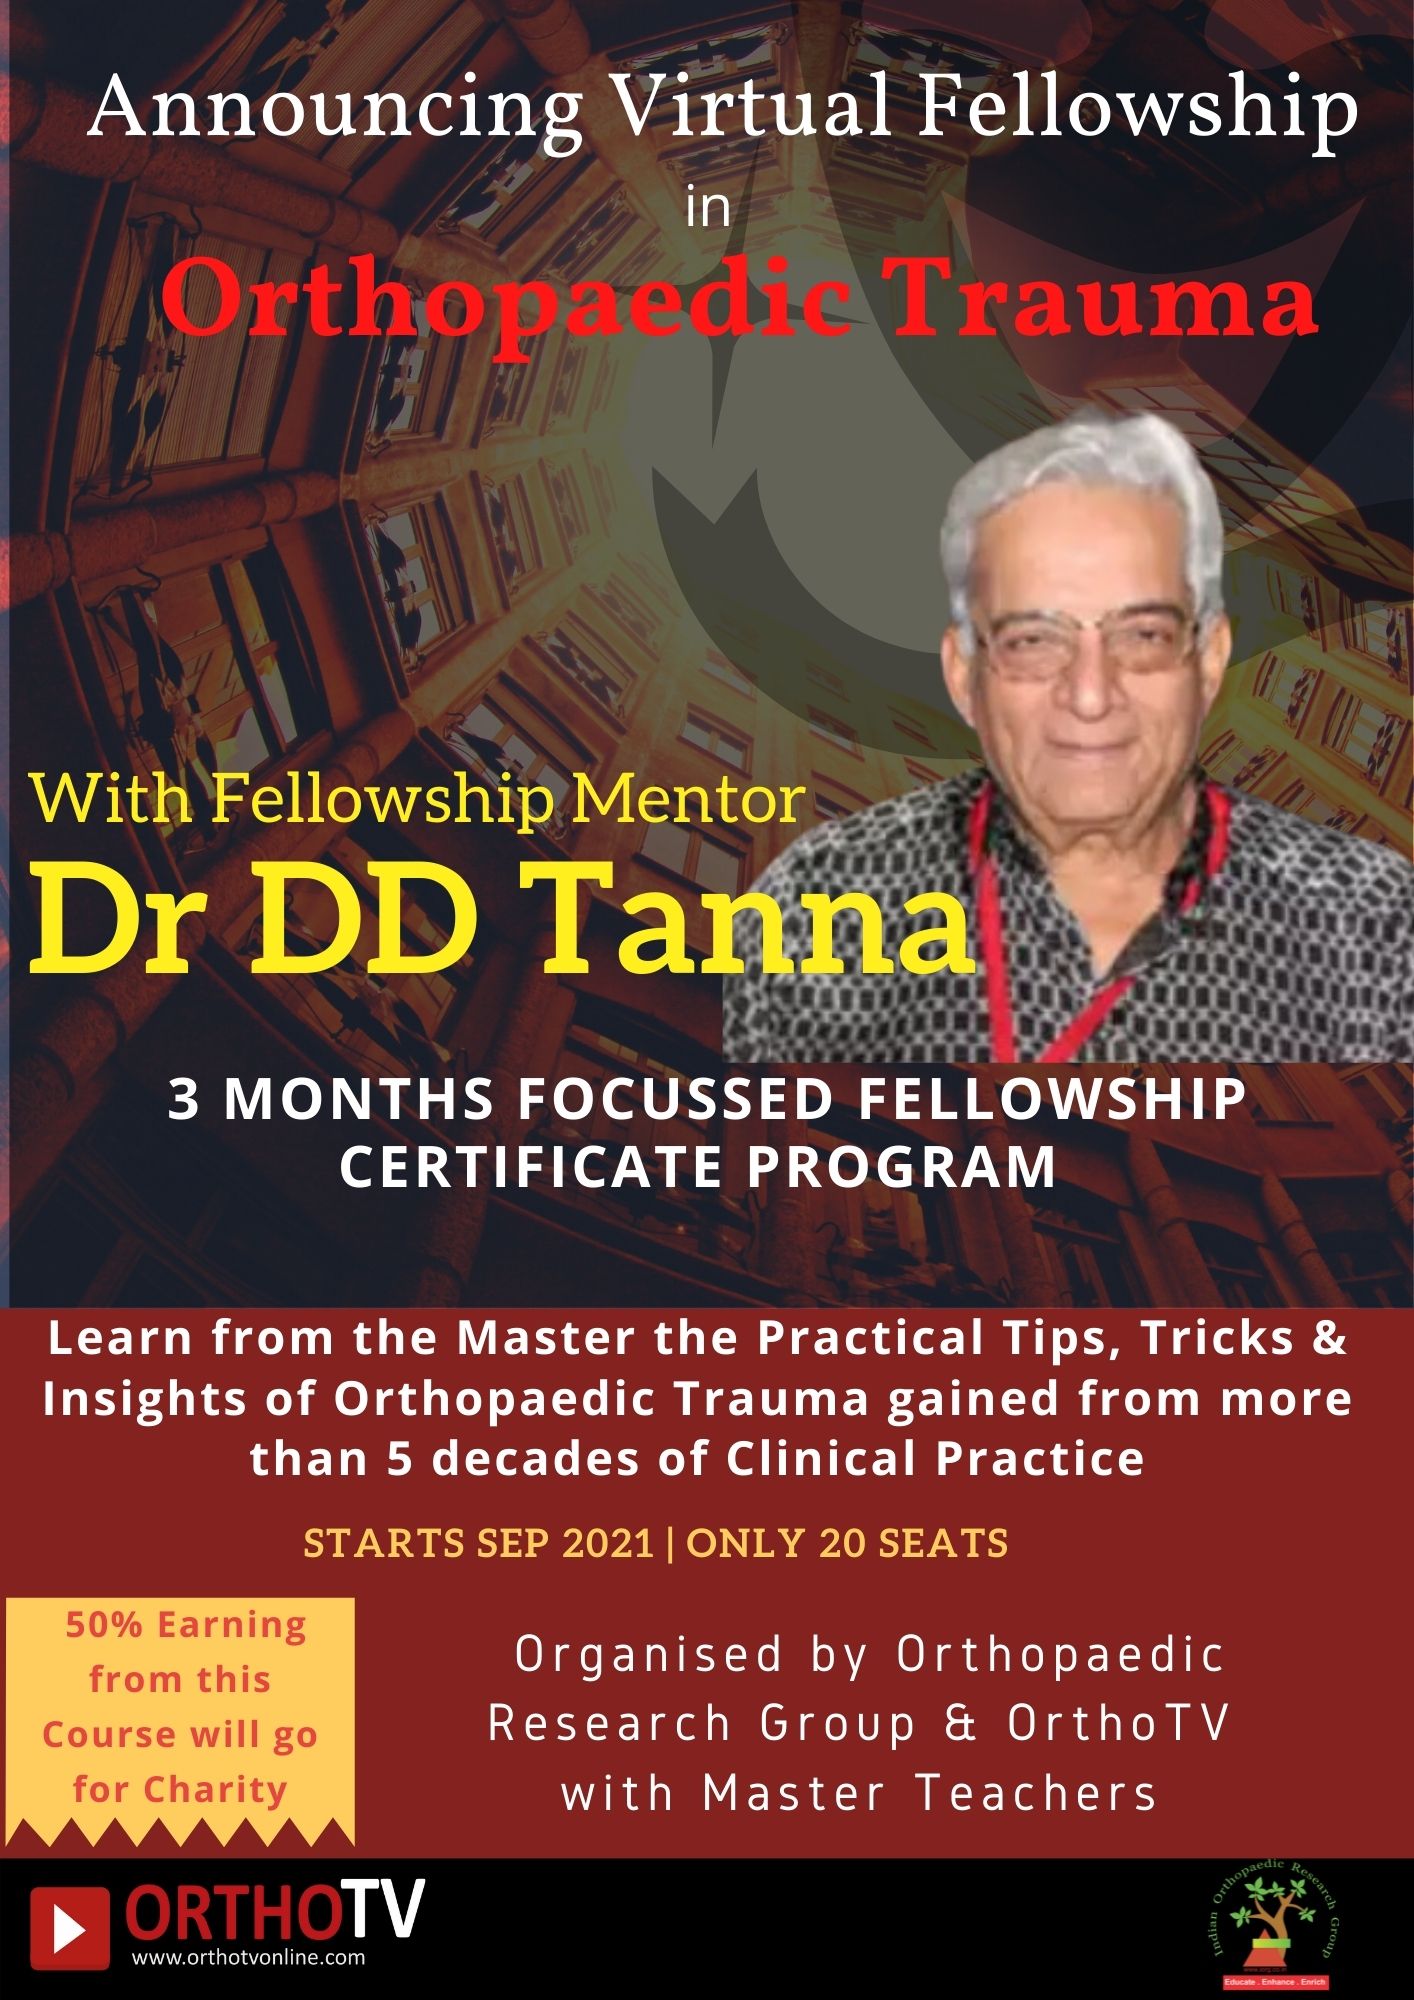 INTERNATIONAL Virtual Online Fellowship in Orthopaedic Trauma Management with Dr DD Tanna